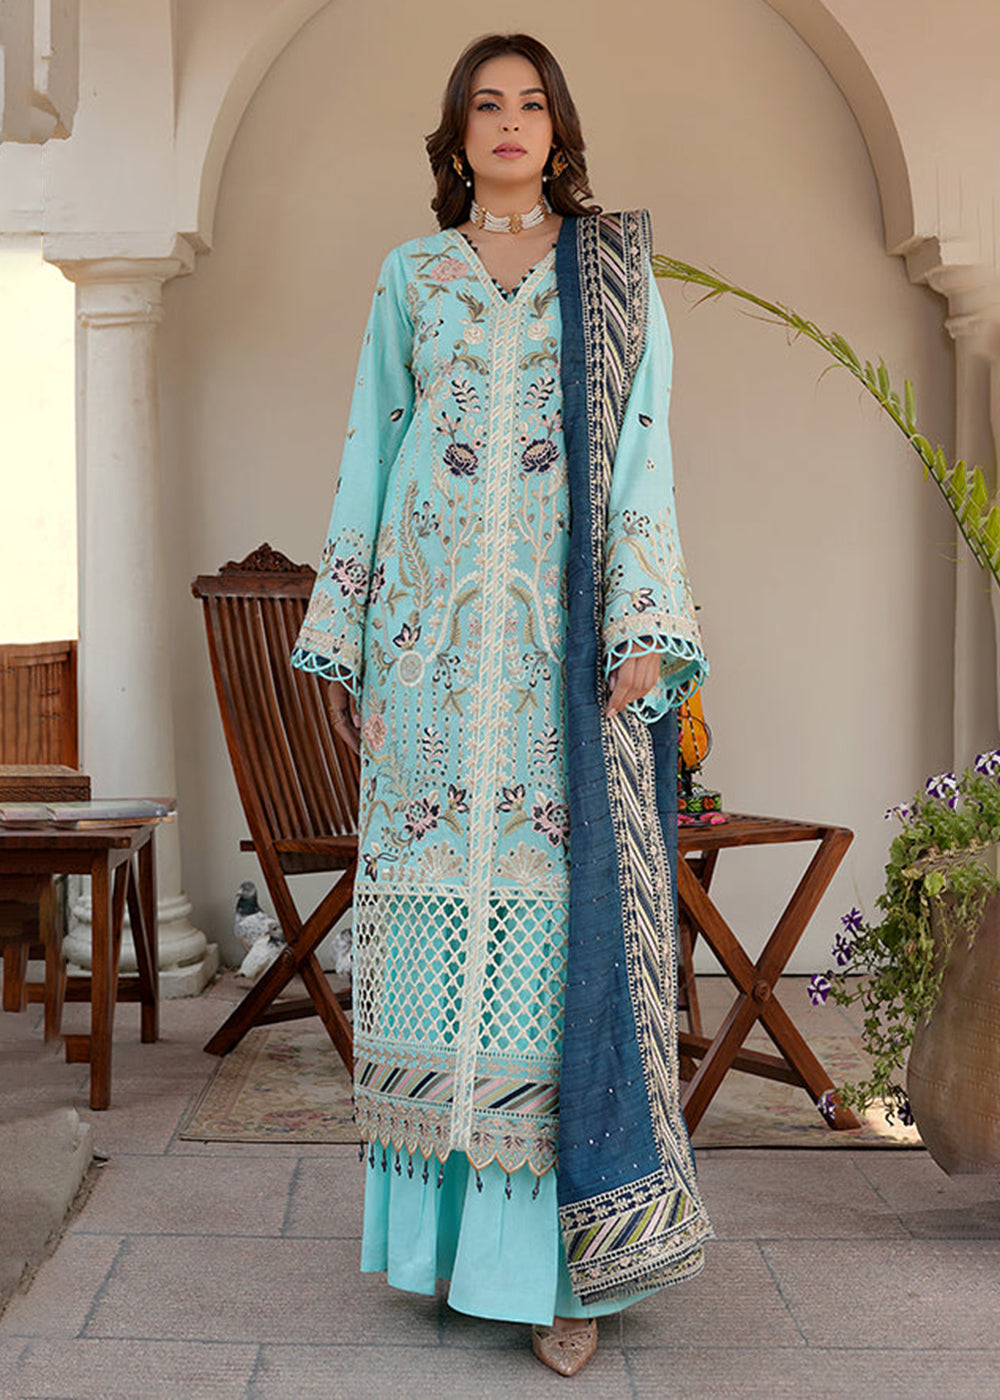 Buy Now Sky Blue Lawn Dress - Bahaar Luxury Lawn by Mariyam's - Caella B-1013 Online in USA, UK, Canada & Worldwide at Empress Clothing. 